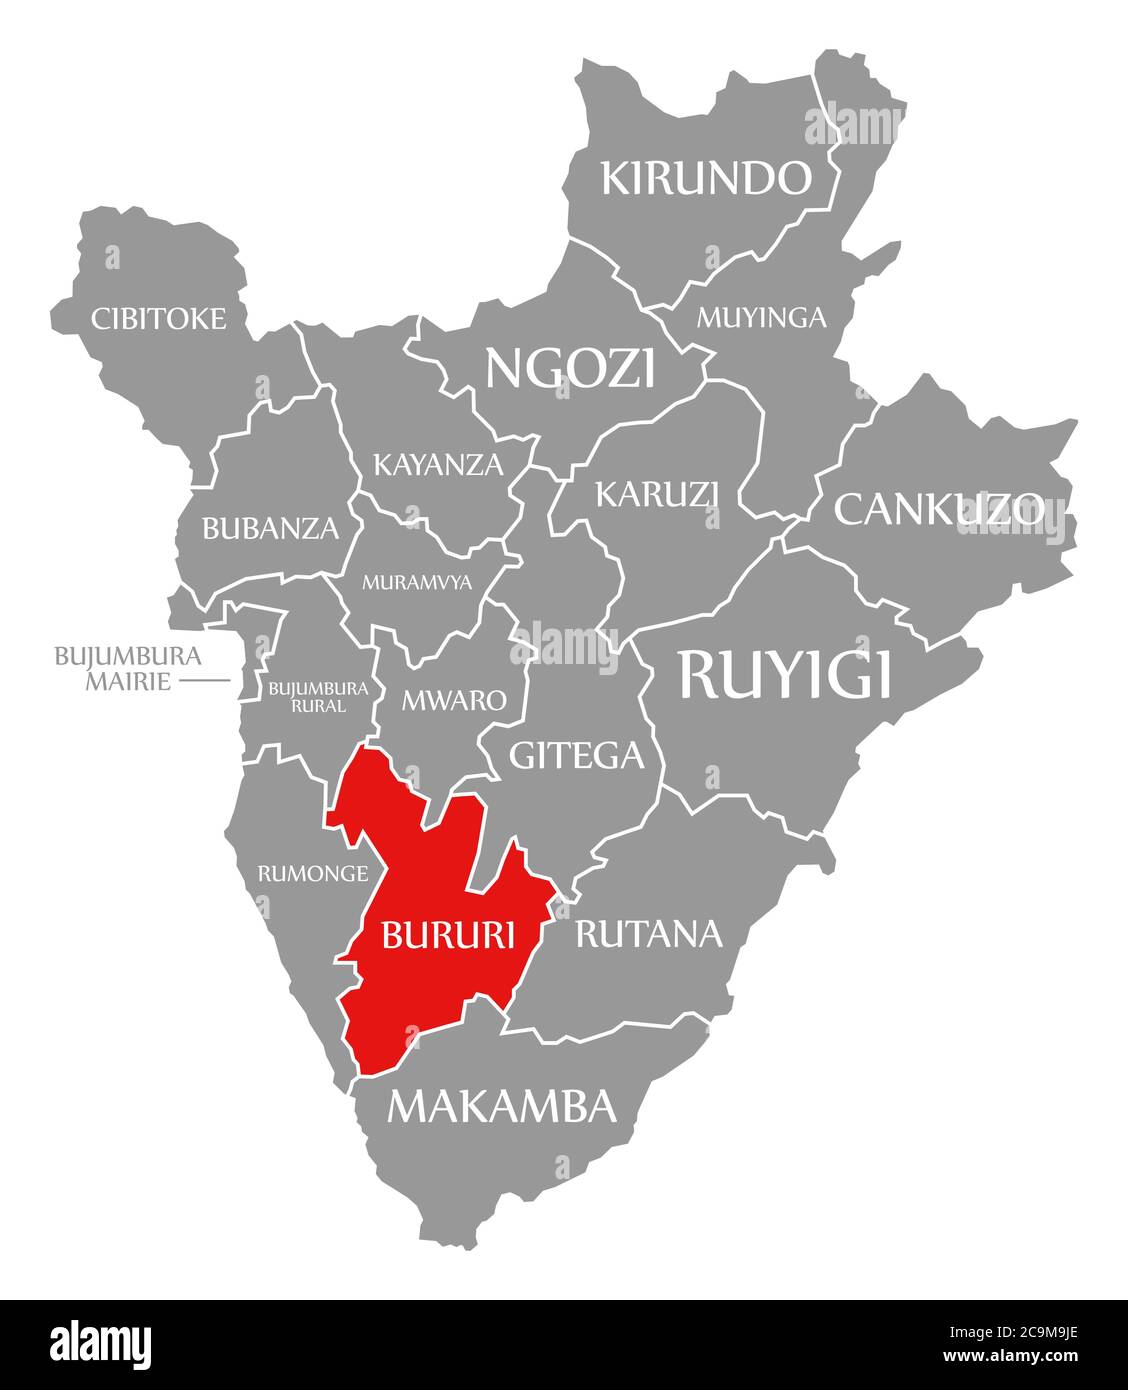 Bururi red highlighted in map of Burundi Stock Photo